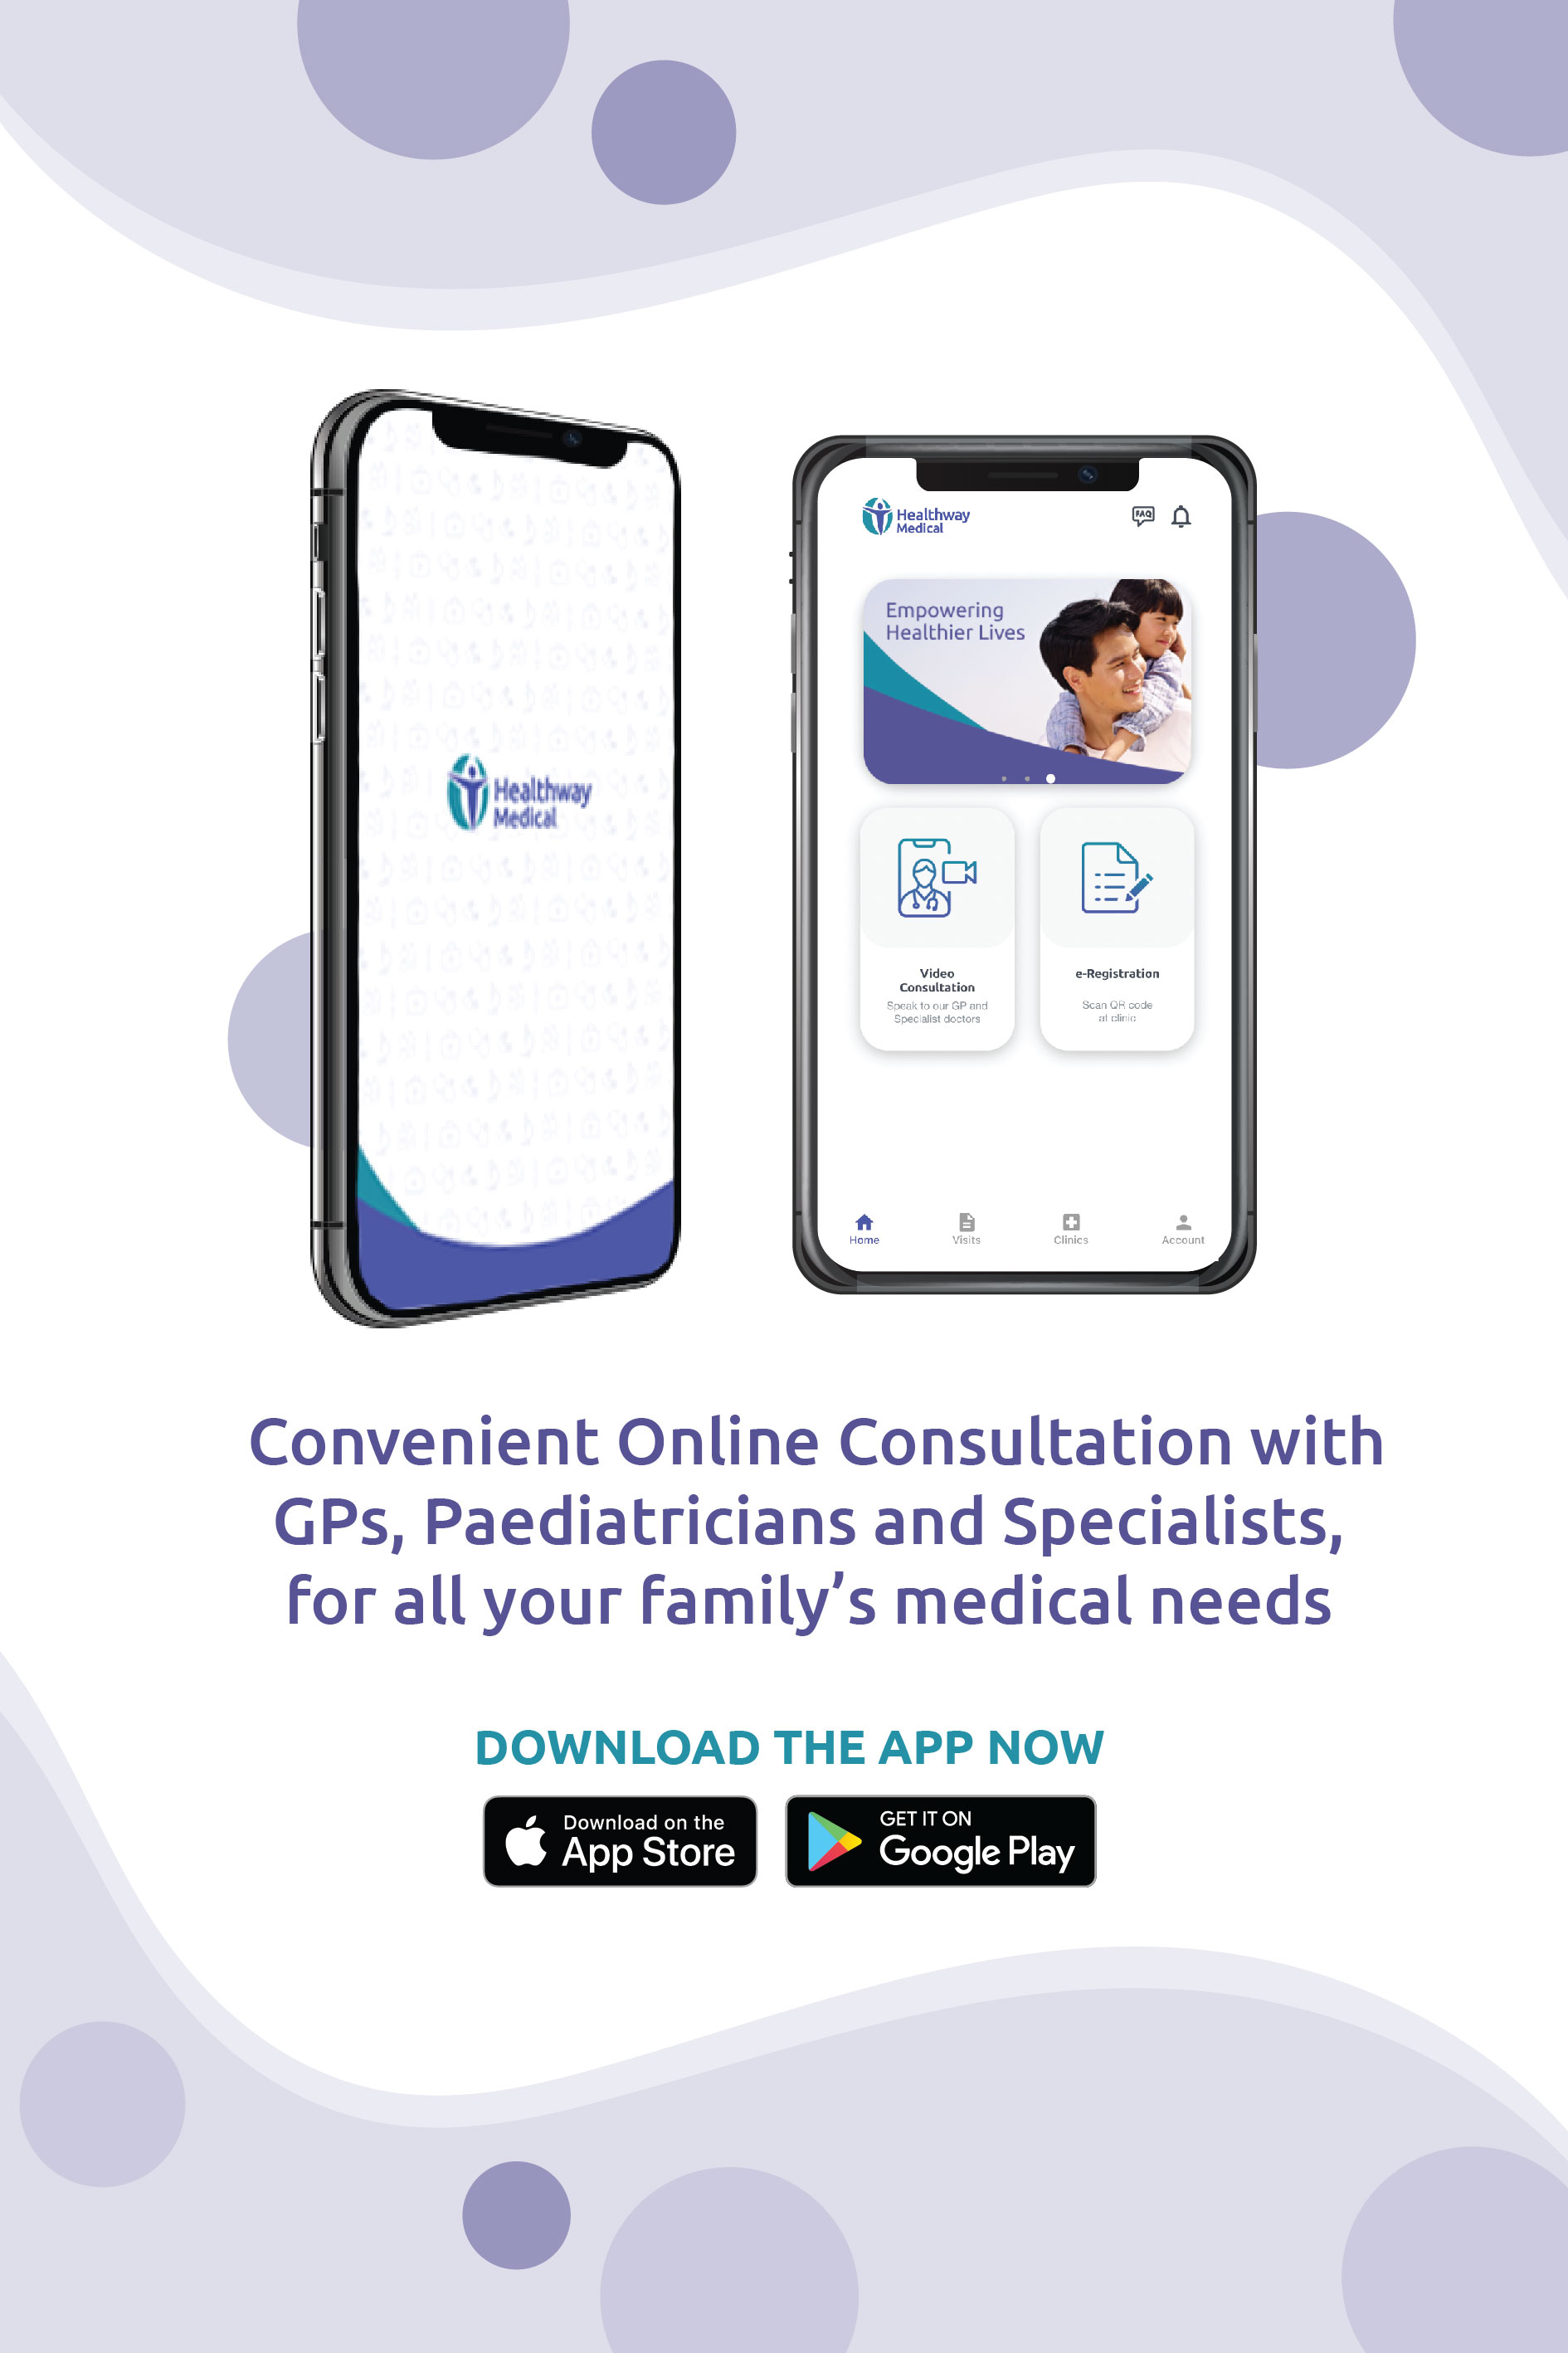 healthway medical app telemedicine download now video consultation